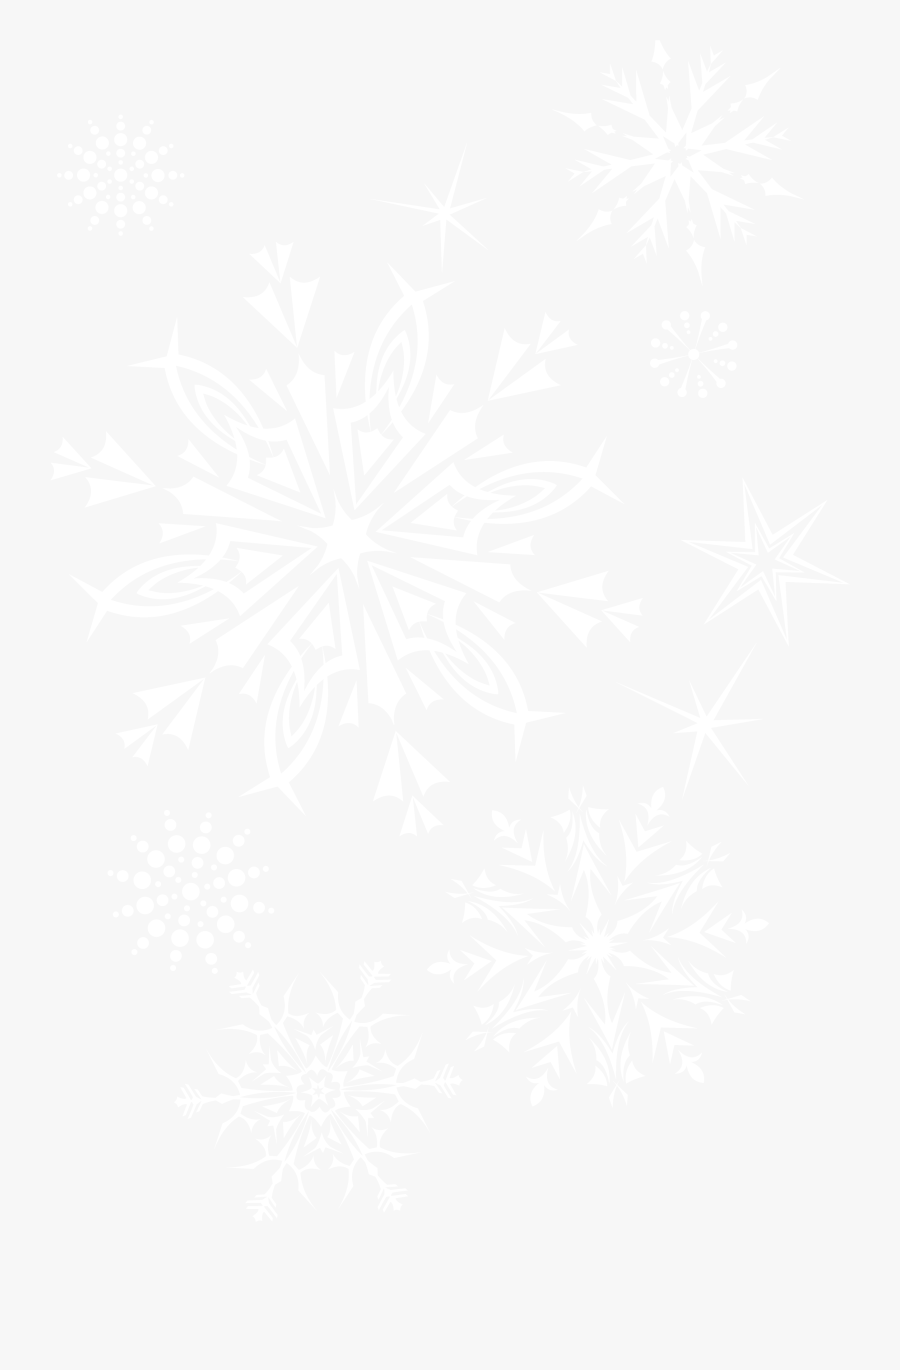 Snowflake Clipart Black And White No Background - Snowflakes Png Black Background, Transparent Clipart